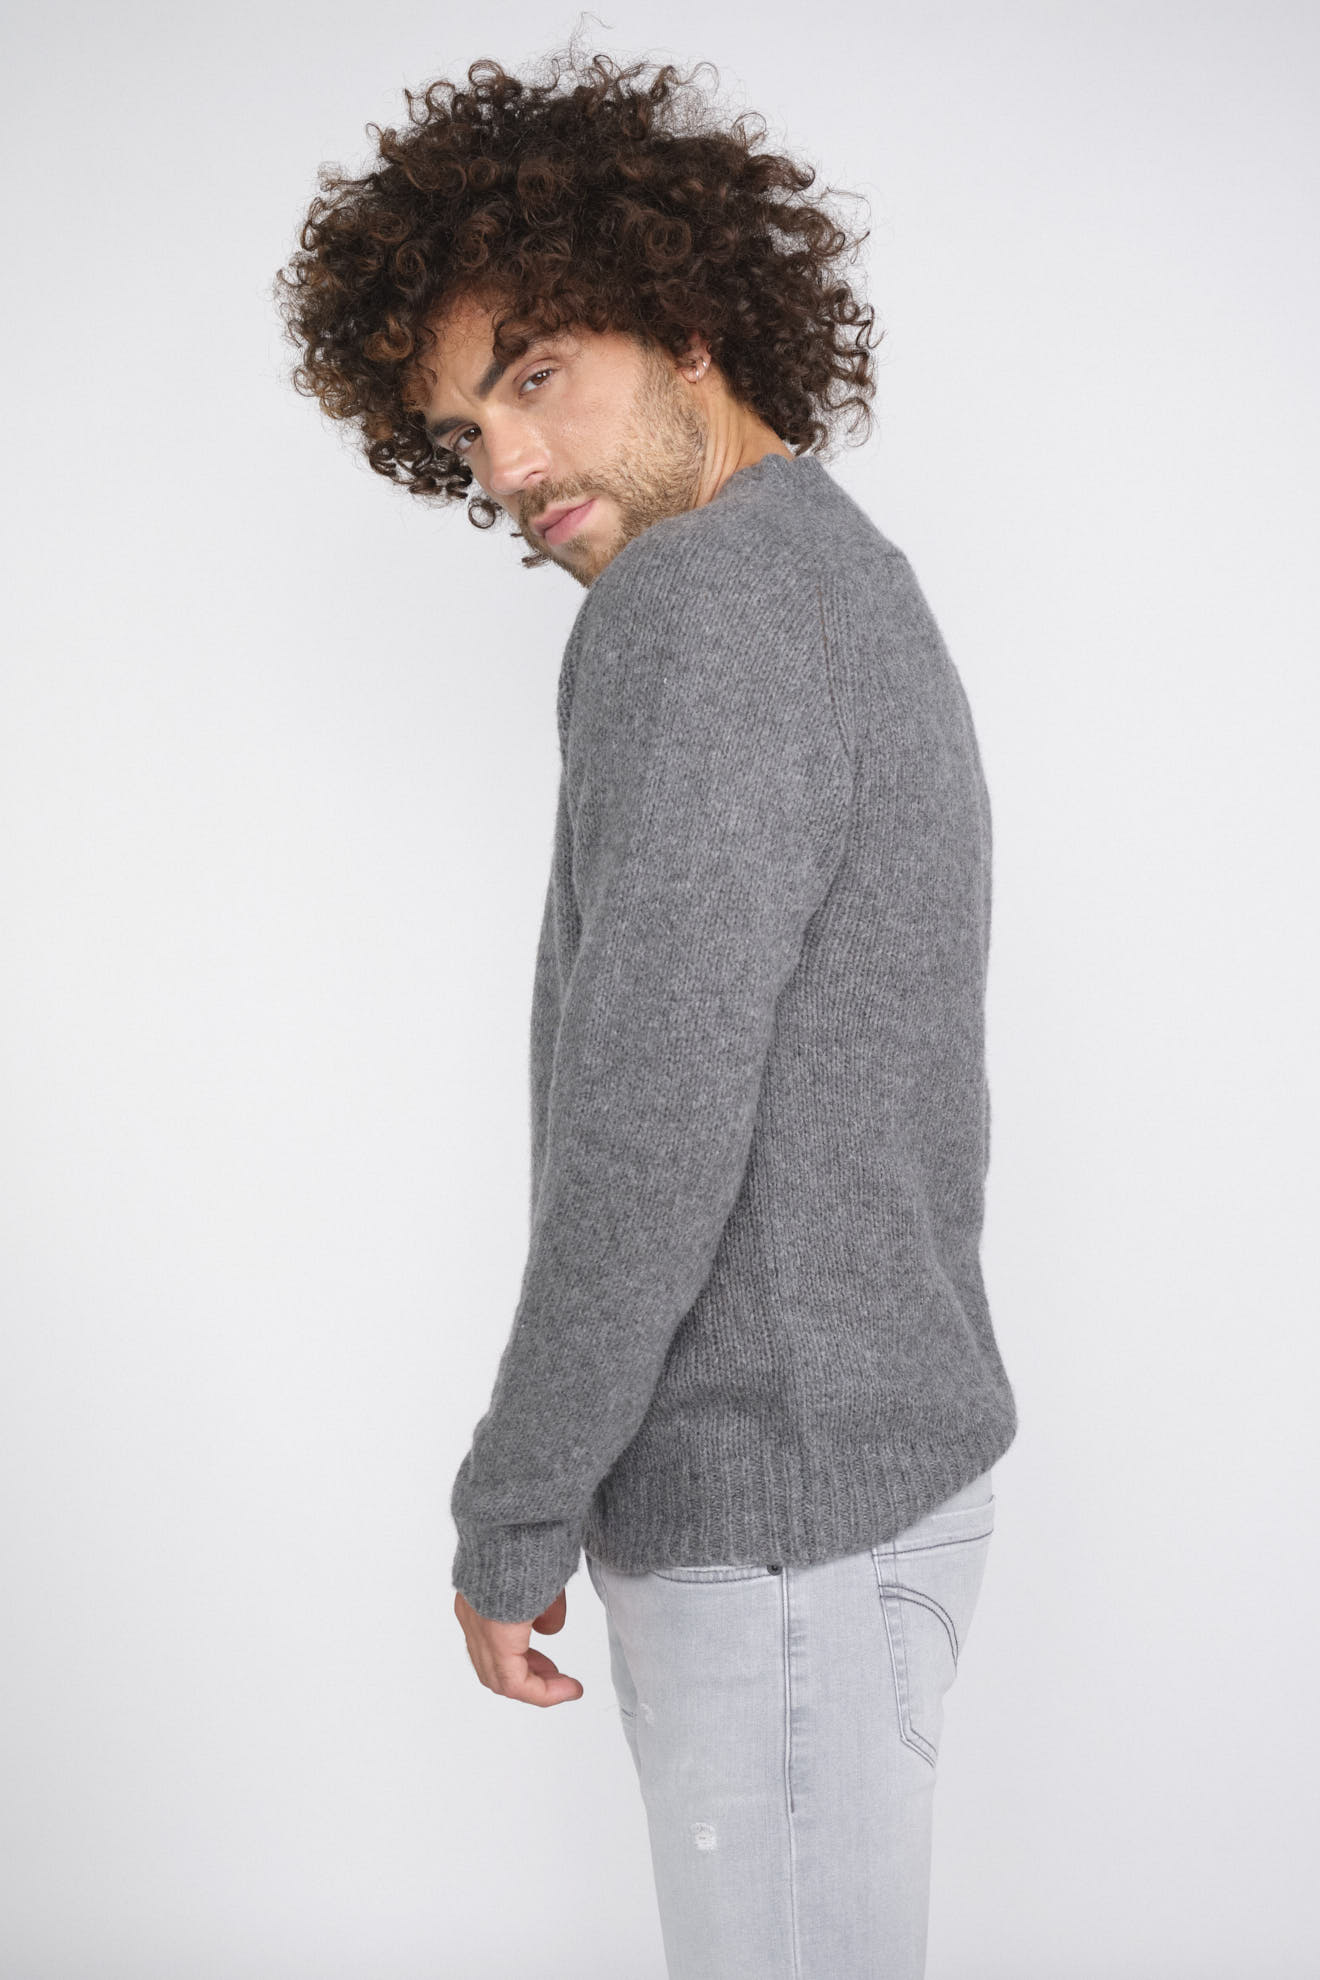 Stephan Boya Leo Nimbus Raglan Sweater grey XL